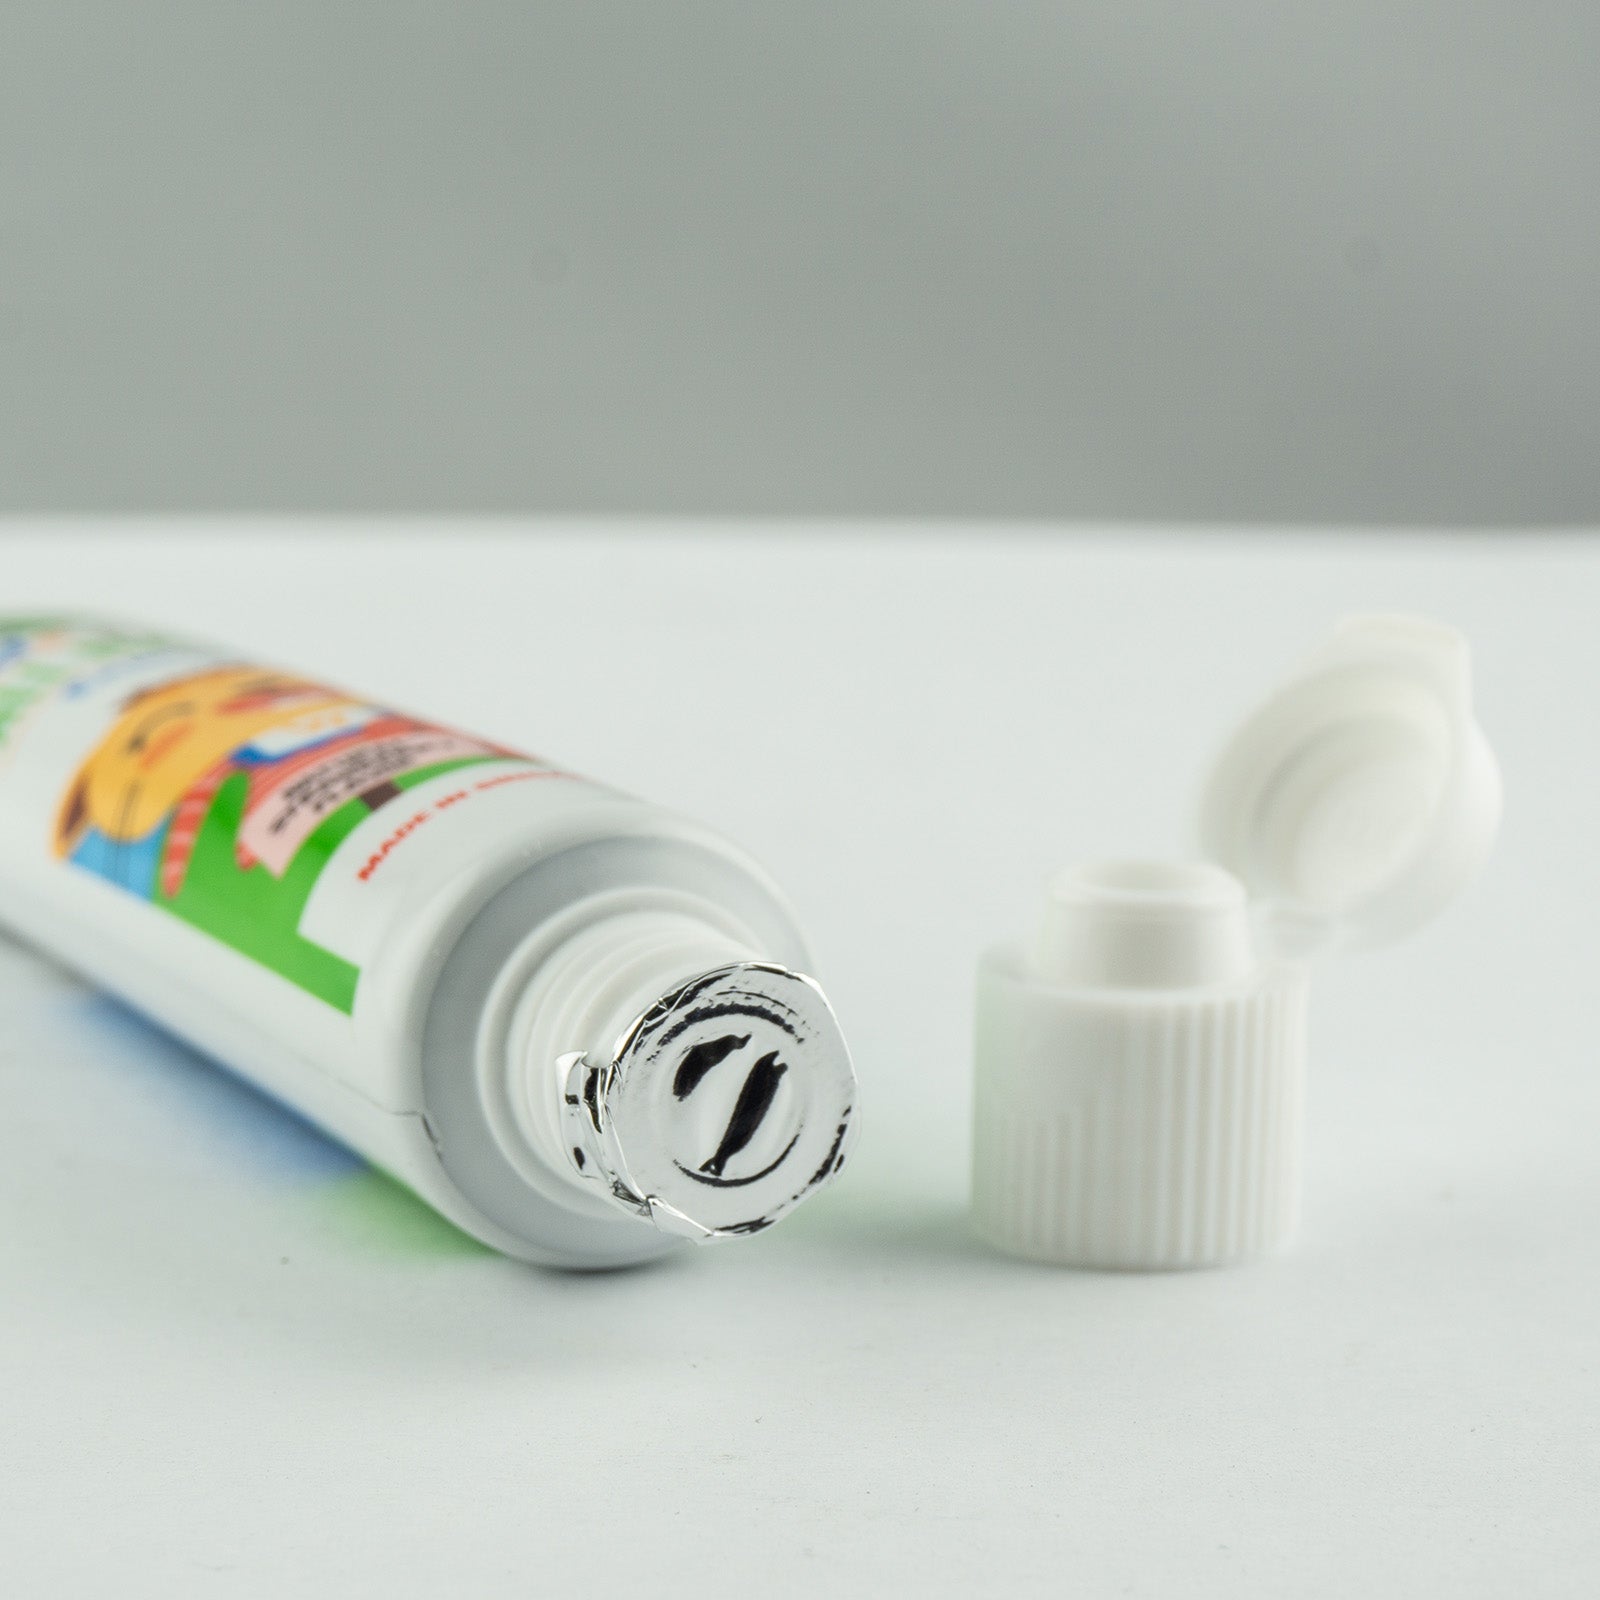 All Natural Enamel Safe Kids’ Toothpaste (Strawberry) 45g